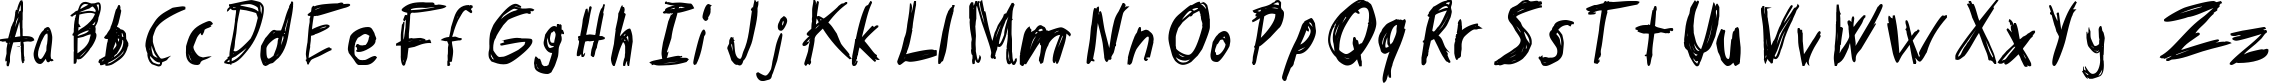 Пример написания английского алфавита шрифтом Tape Loop